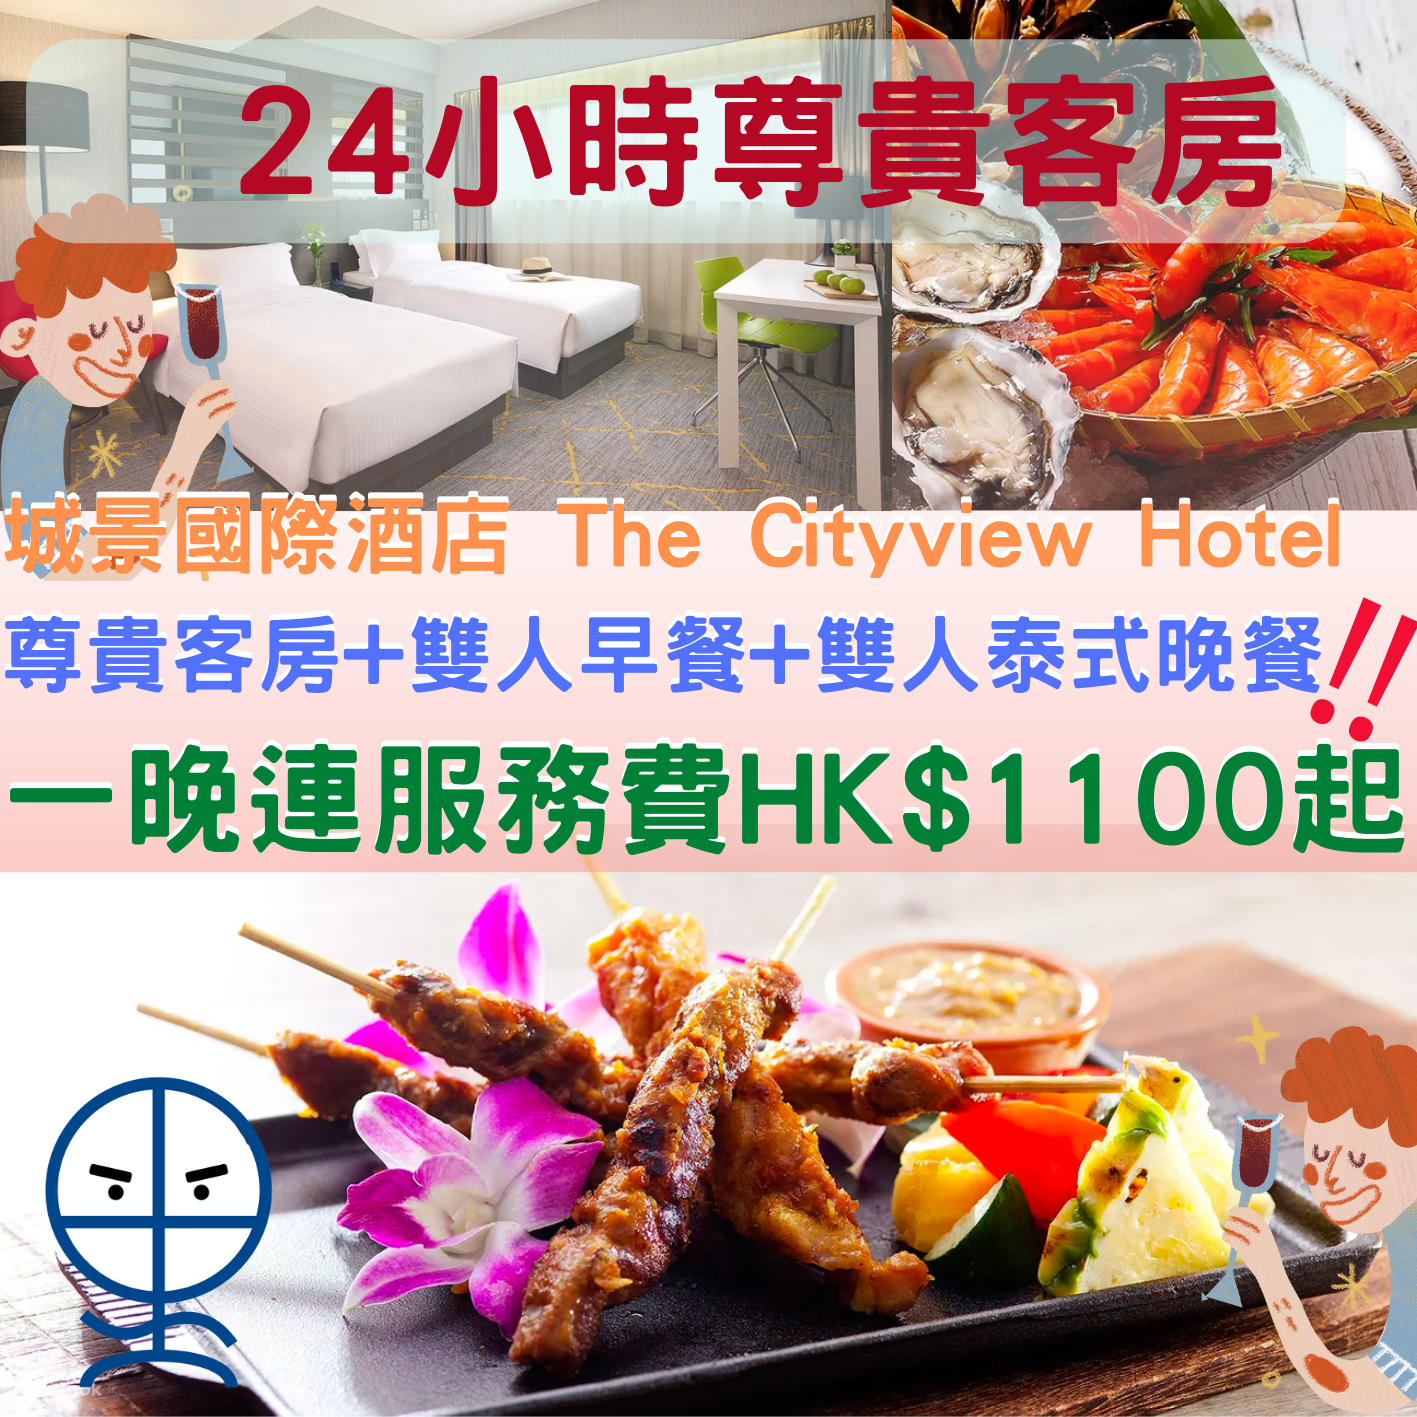 城景國際酒店-The Cityview Hotel優惠-平玩Staycation-香港Staycation